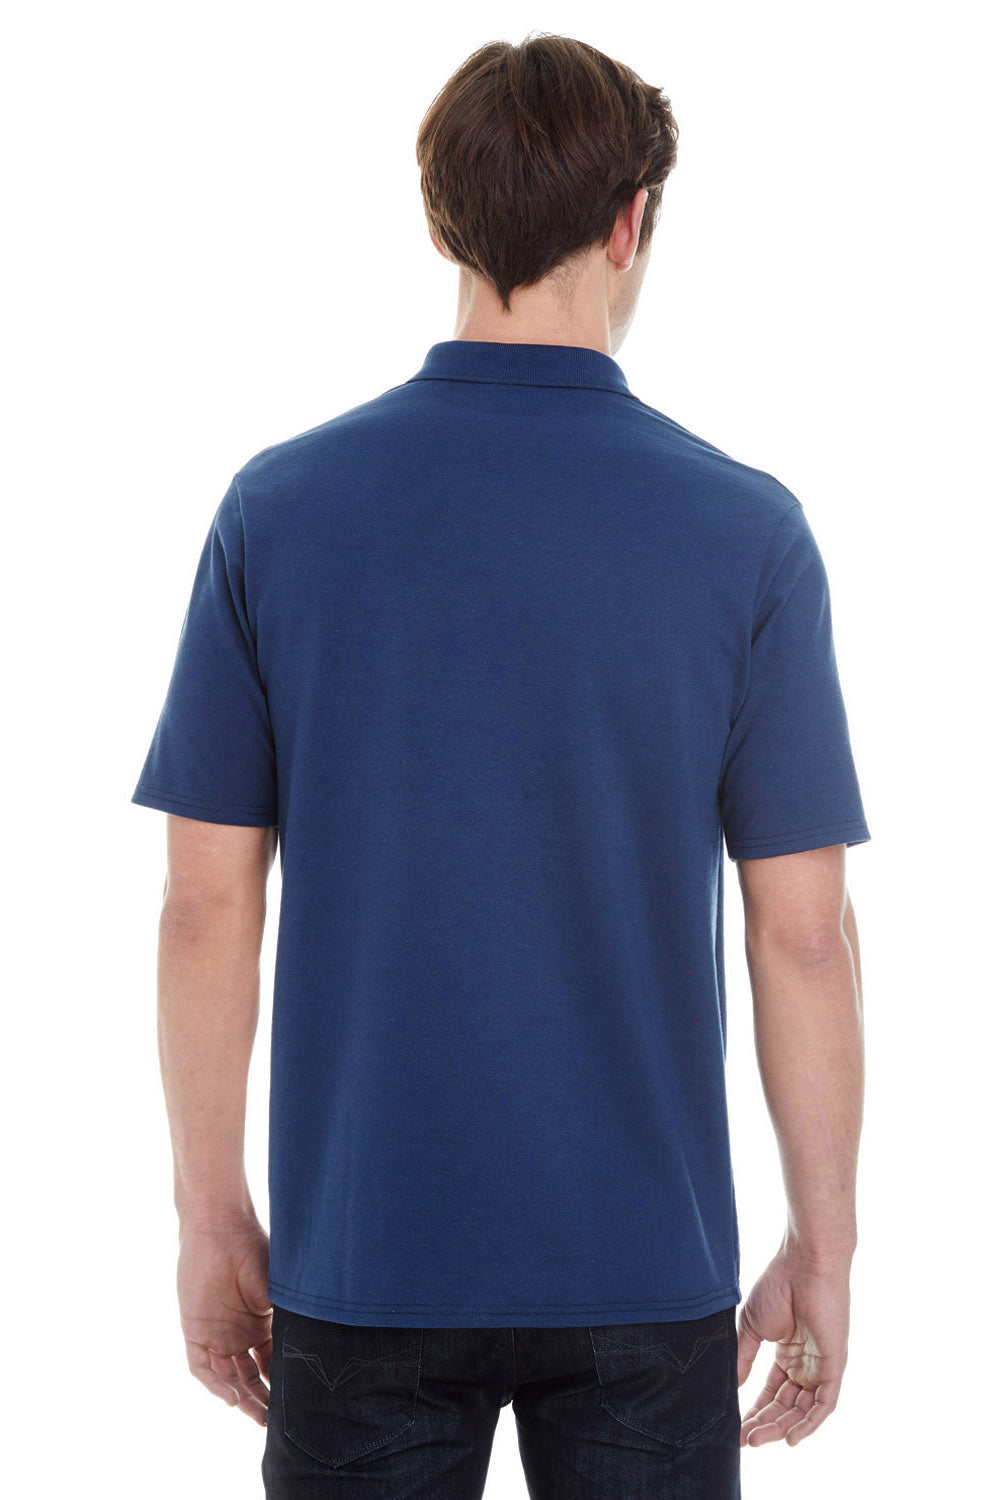 Hanes 055P Mens X-Temp Fresh IQ Moisture Wicking Short Sleeve Polo Shirt Navy Blue Back